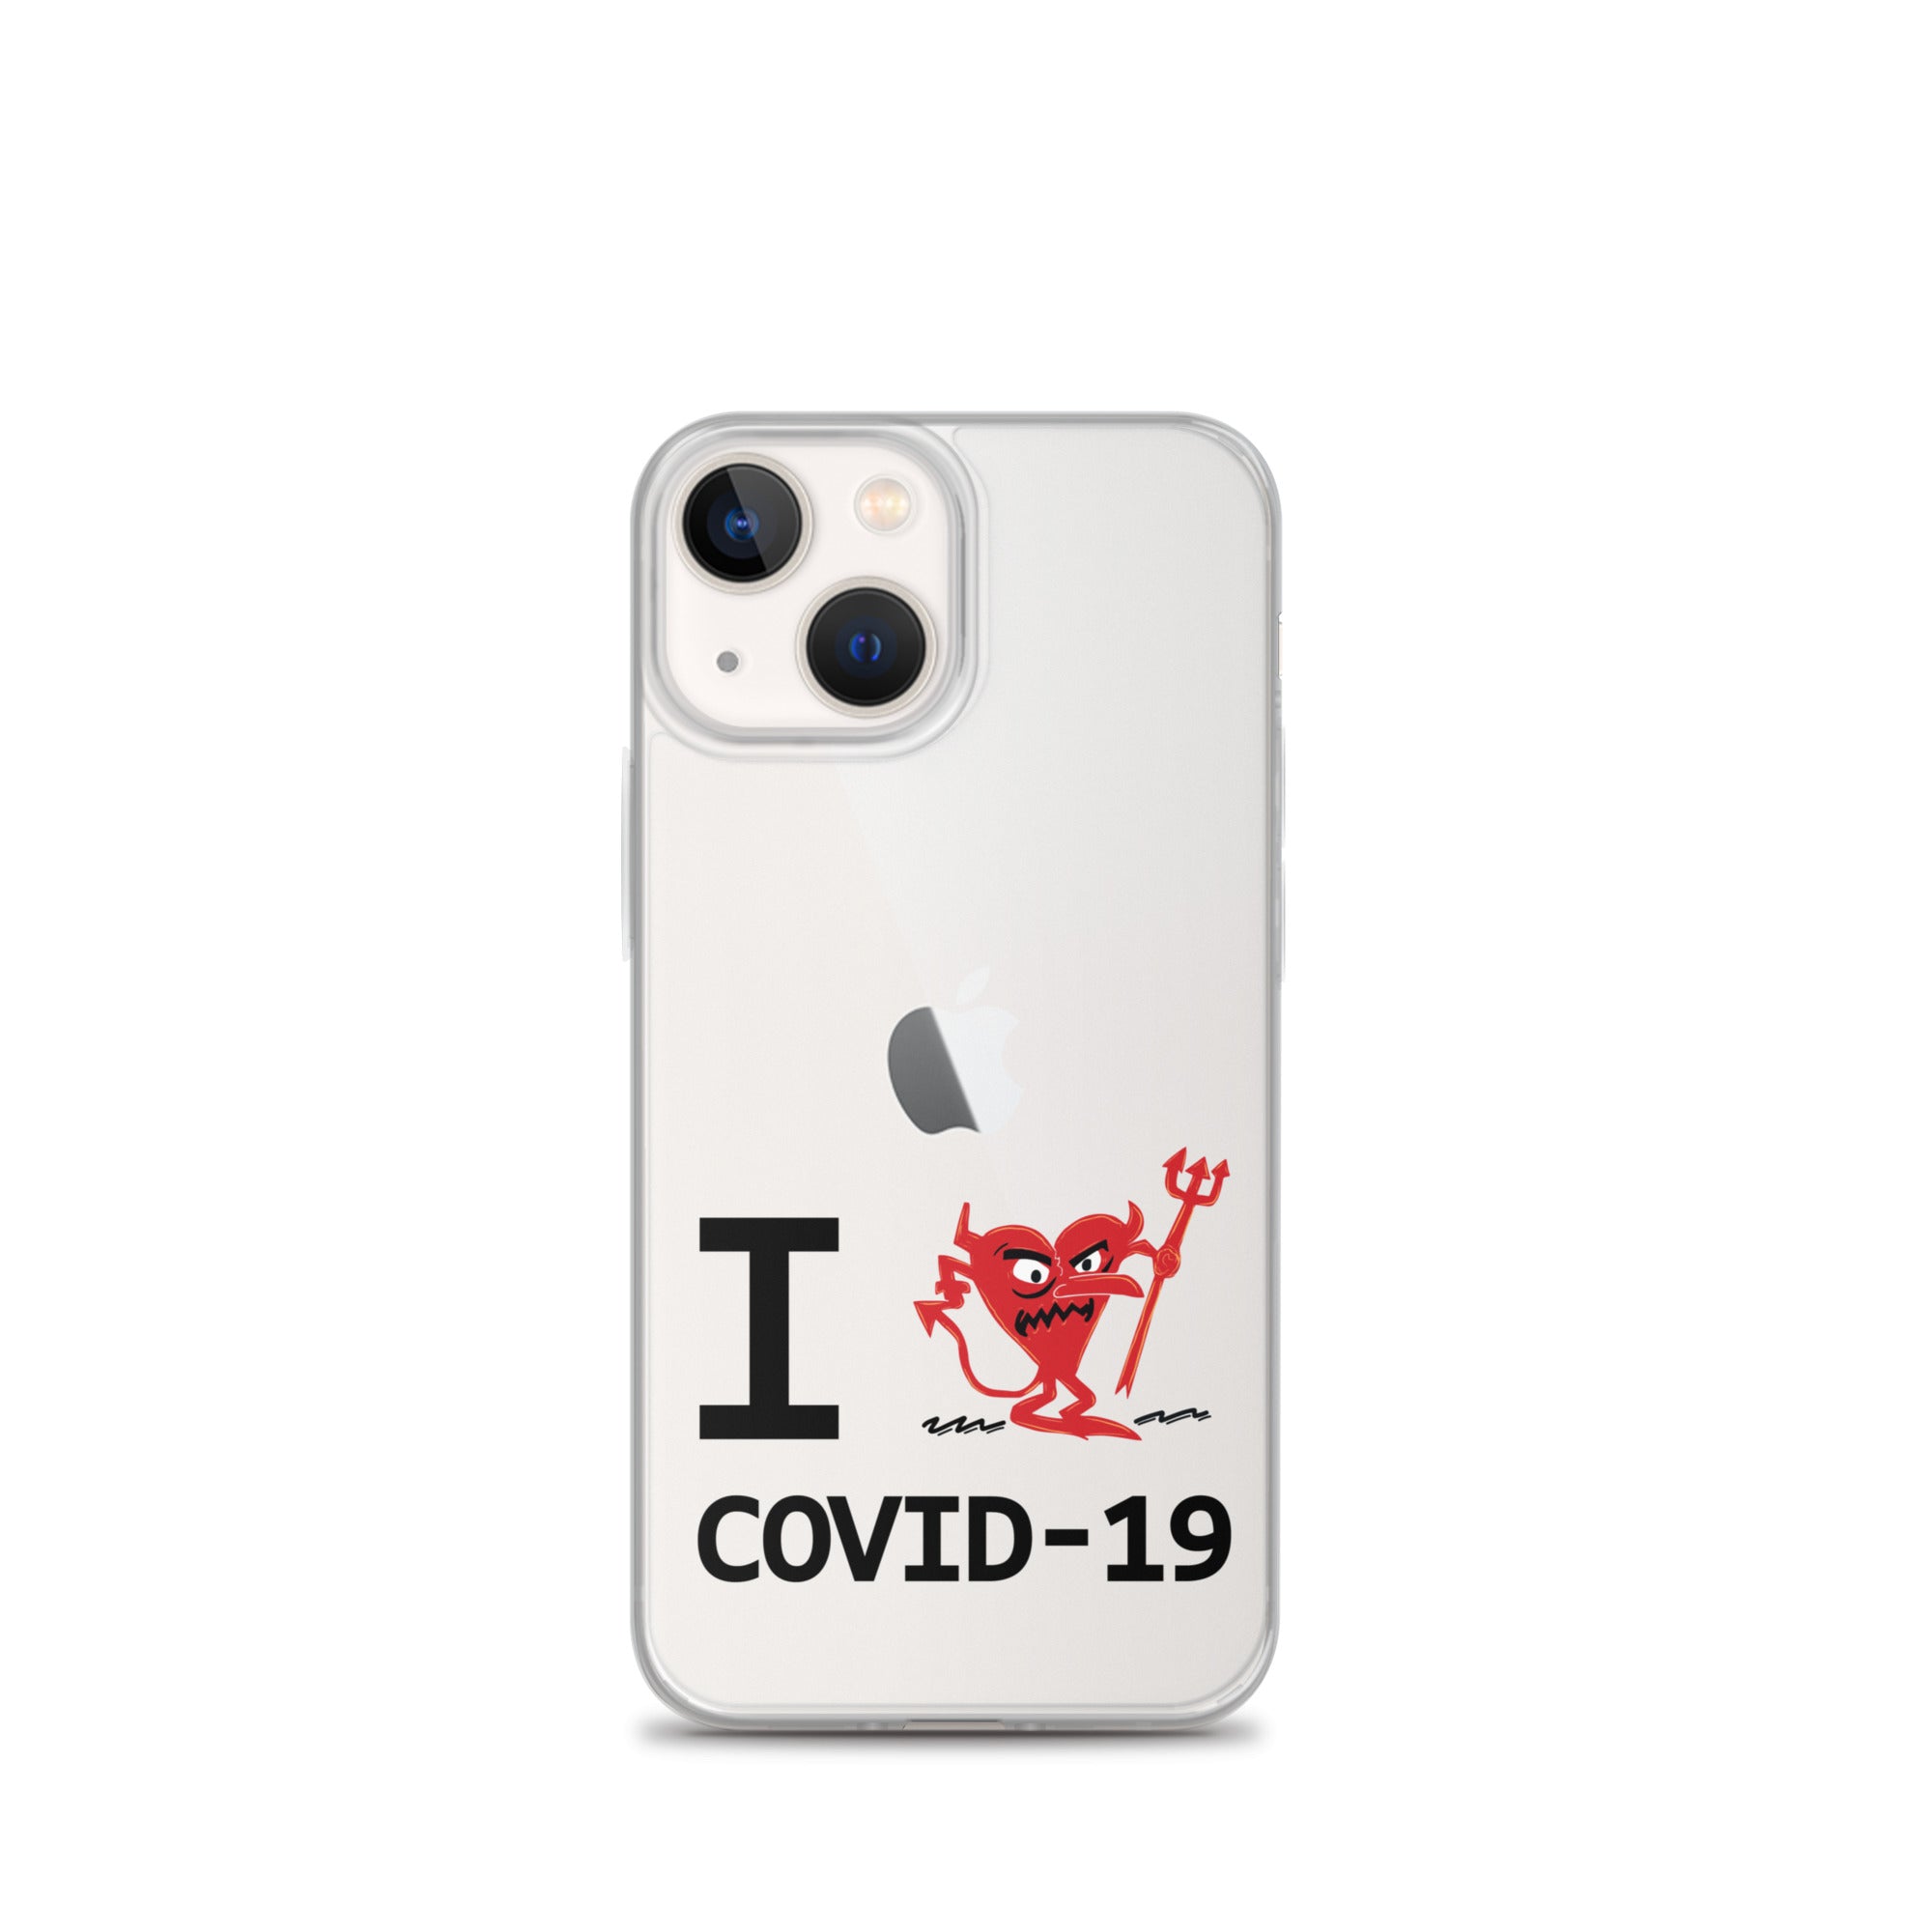 COVID-19 iPhone Case